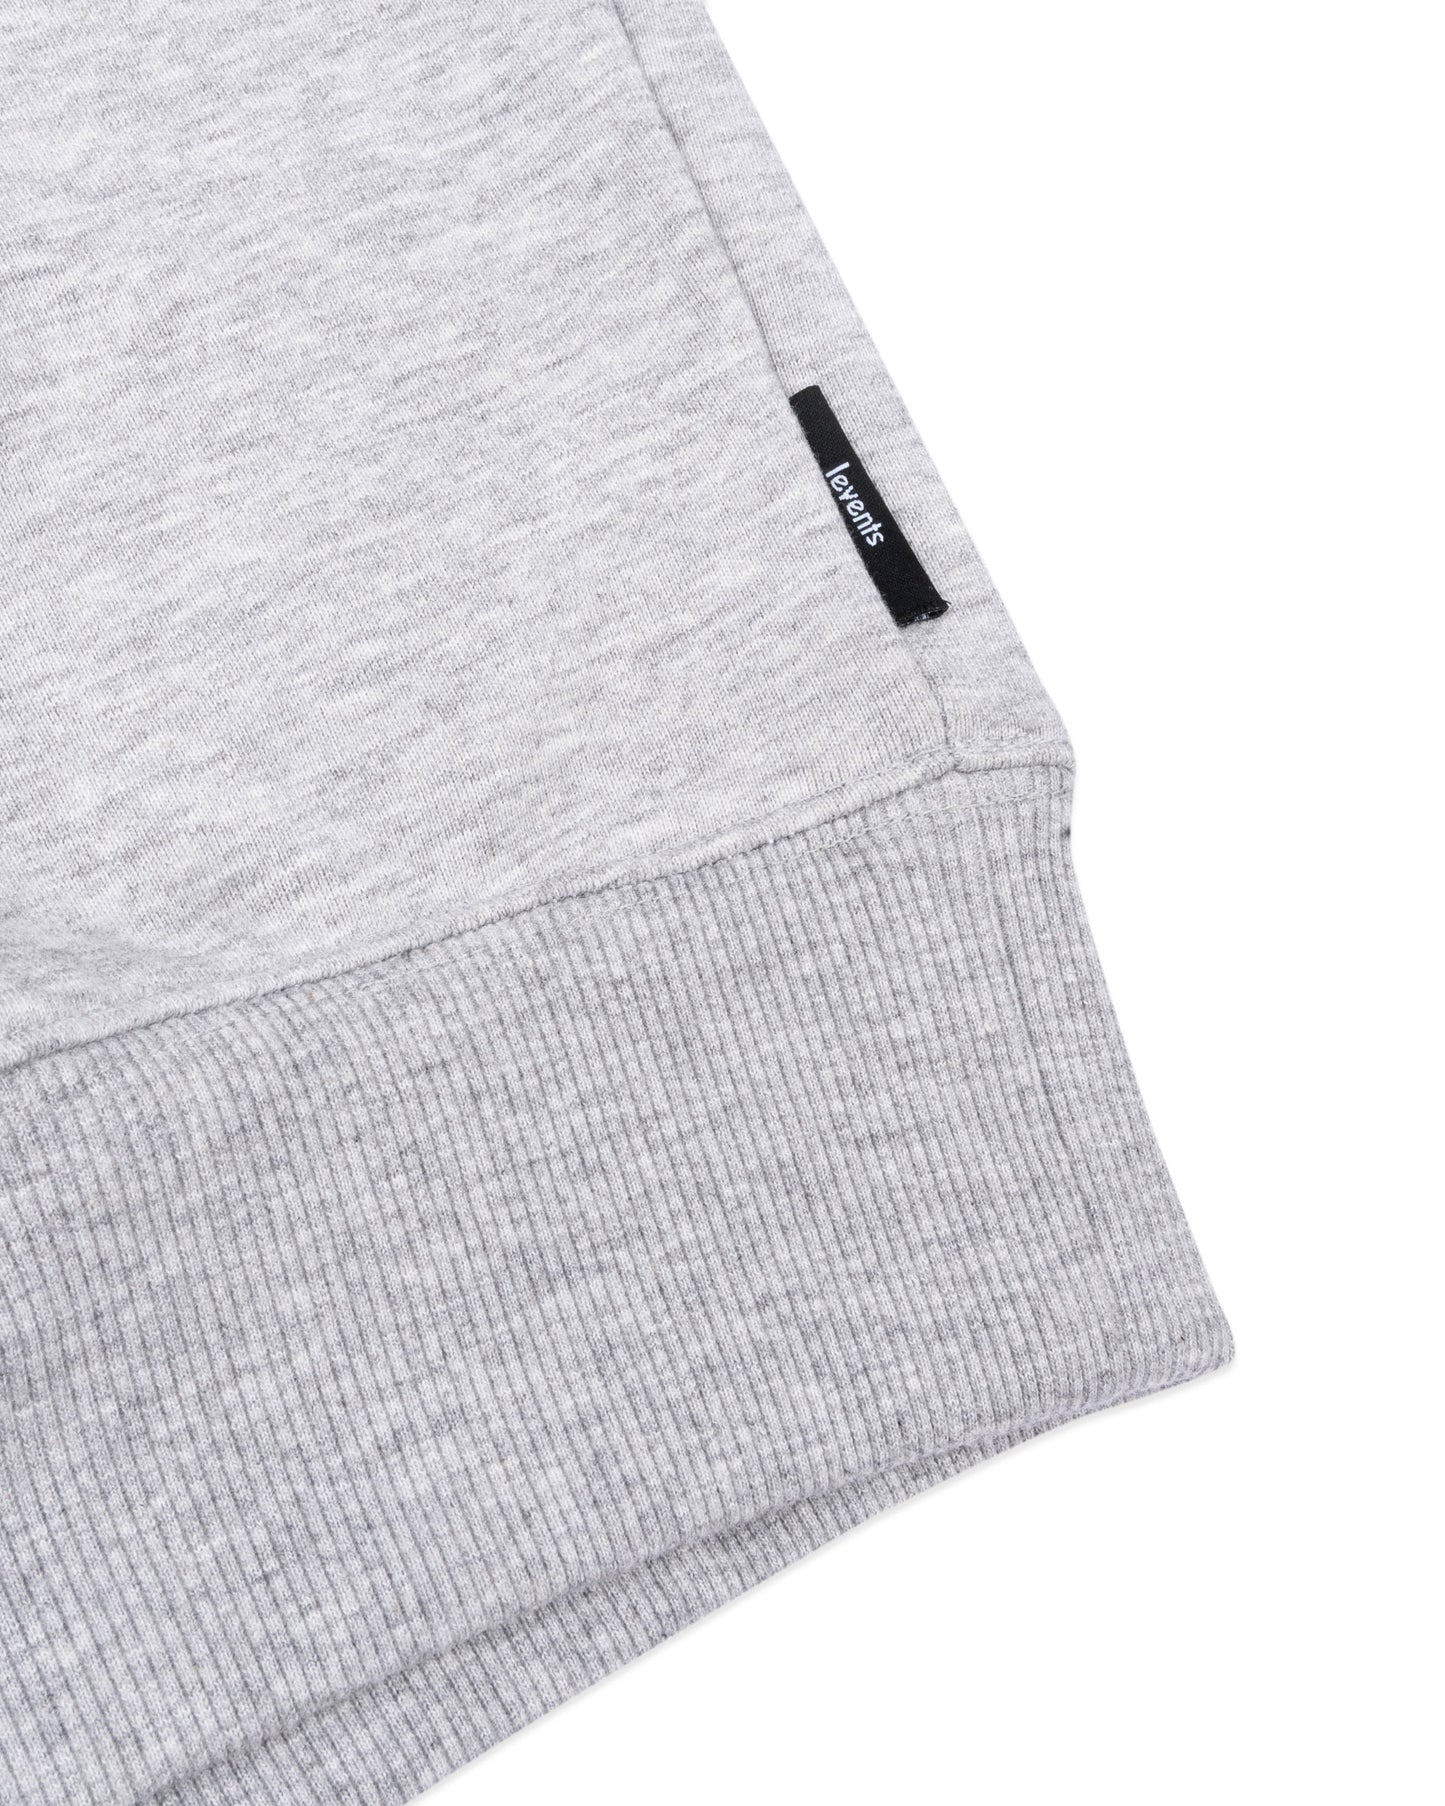 Levents® Mini Logo Zipper Hoodie/ Grey